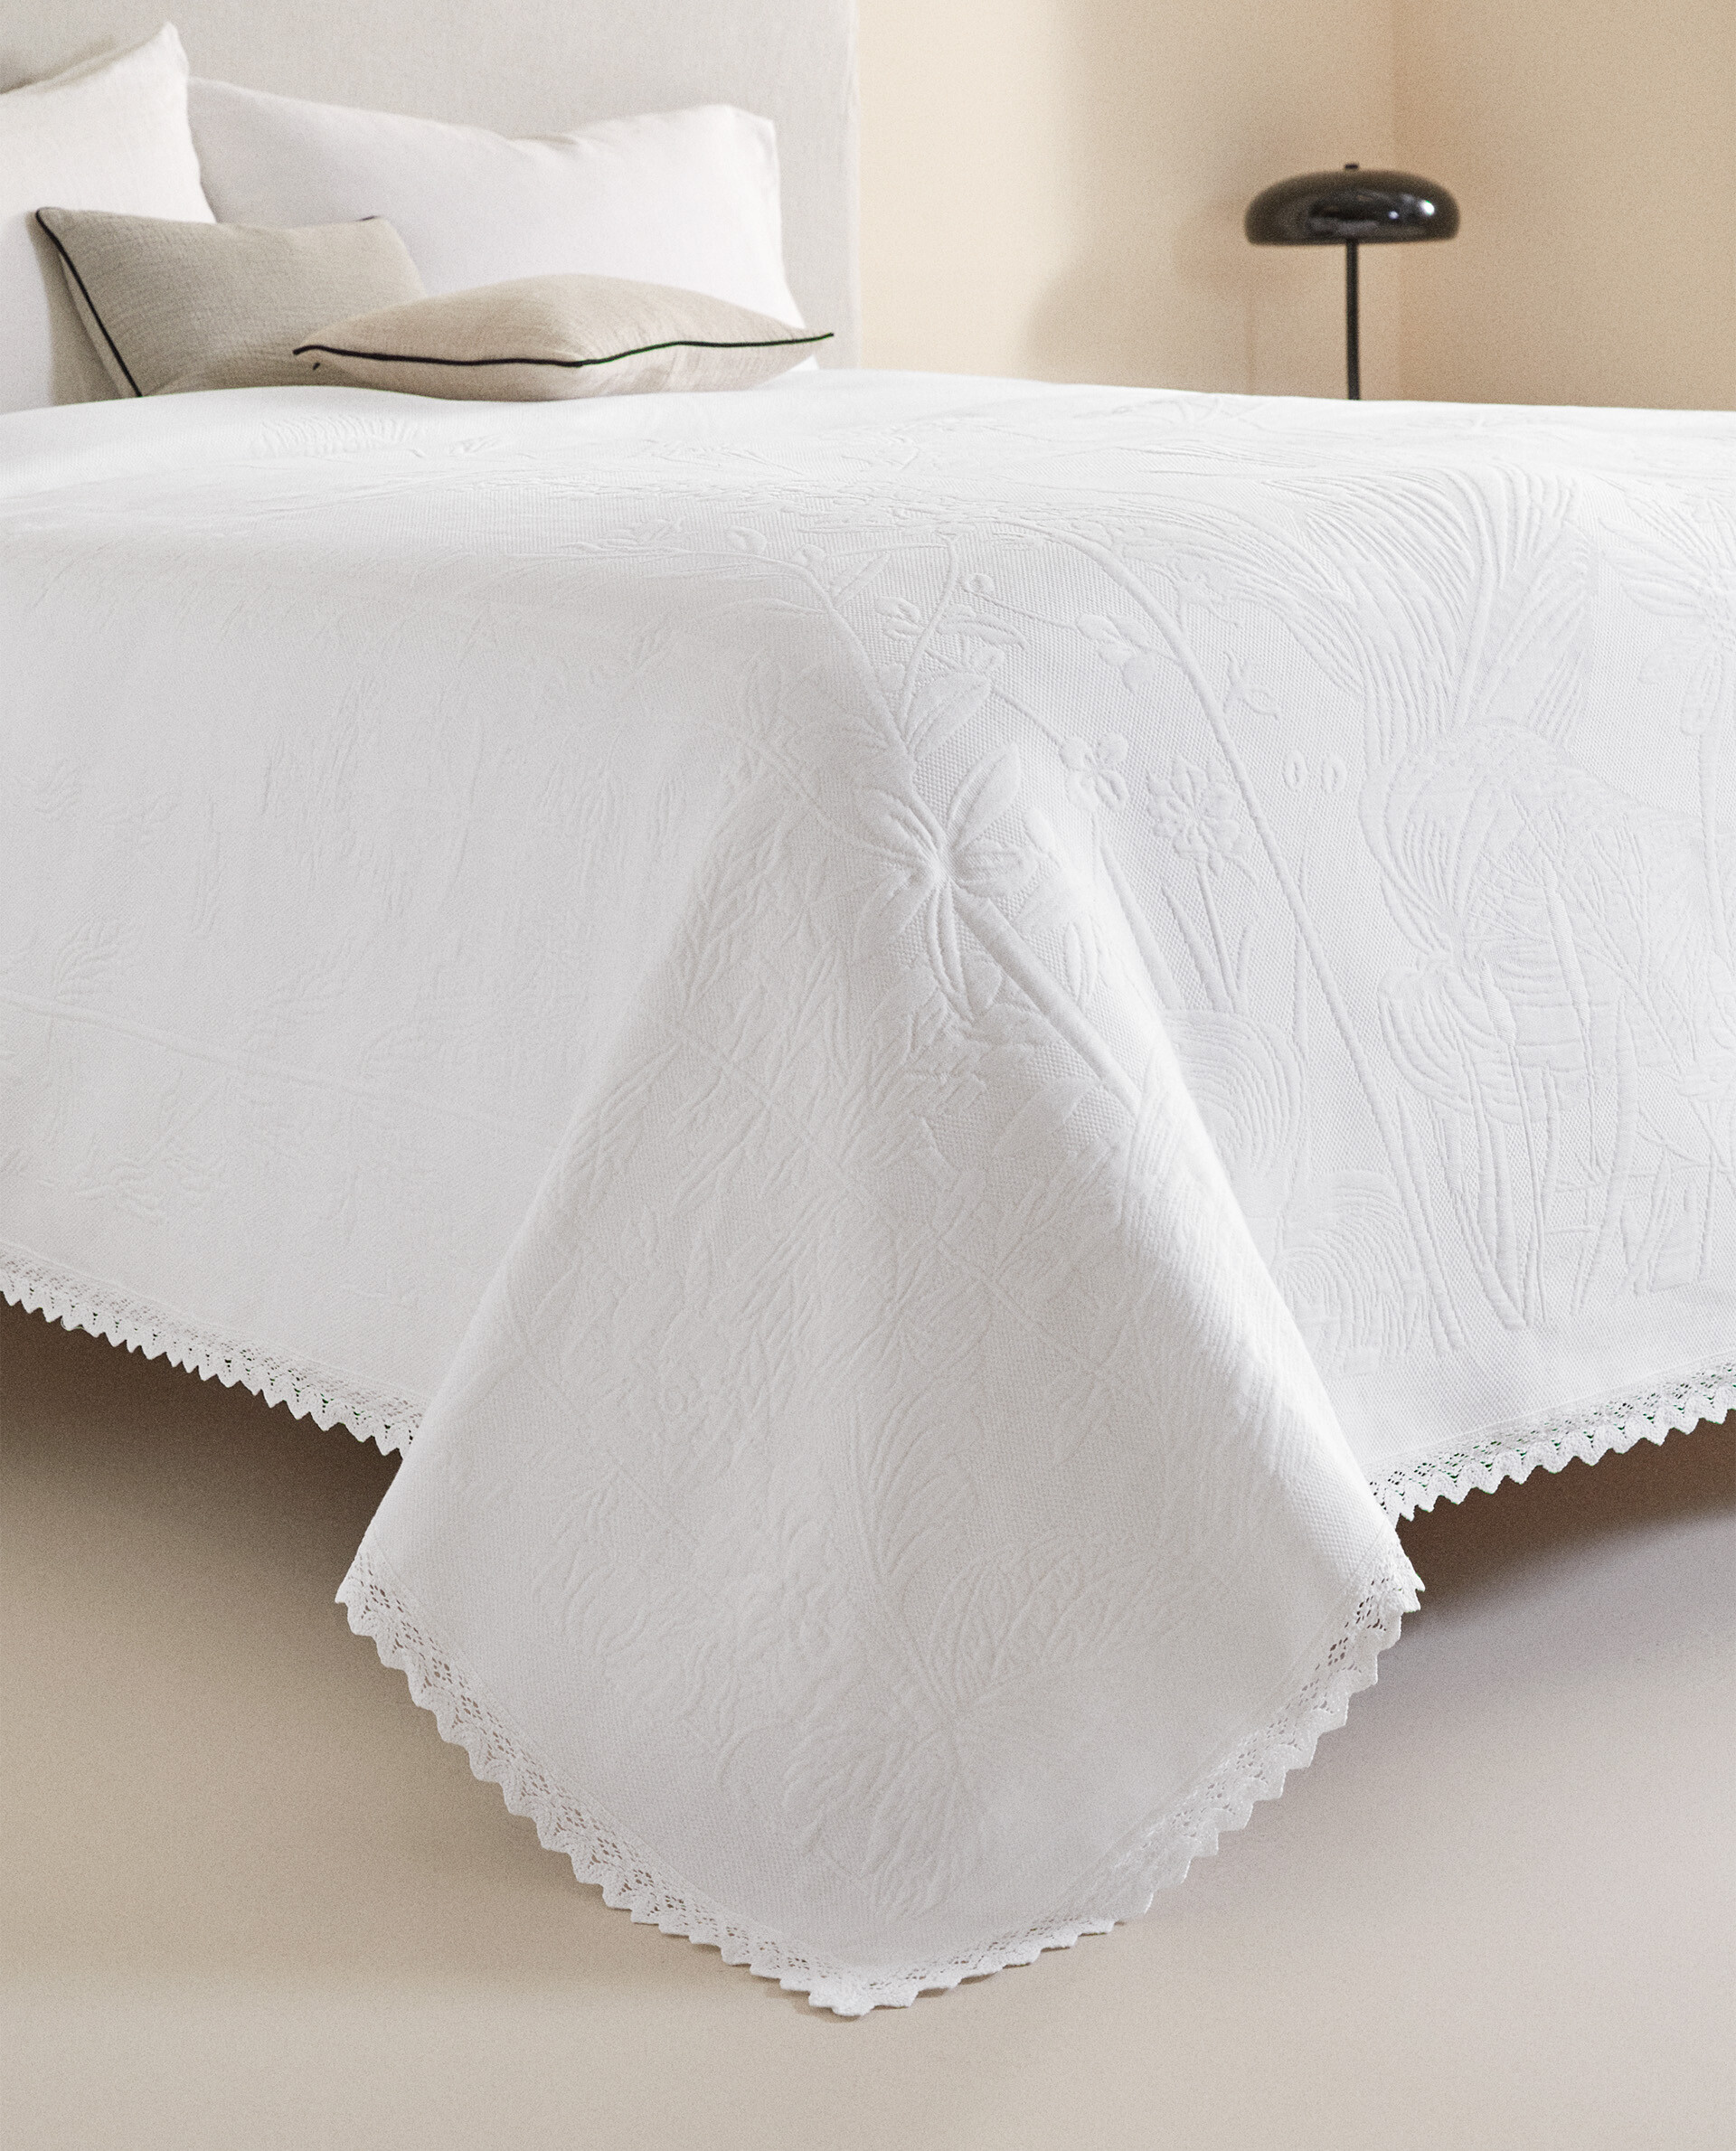 Tropical Motif Bedspread Bedspreads Bedroom Zara Home United States Of America